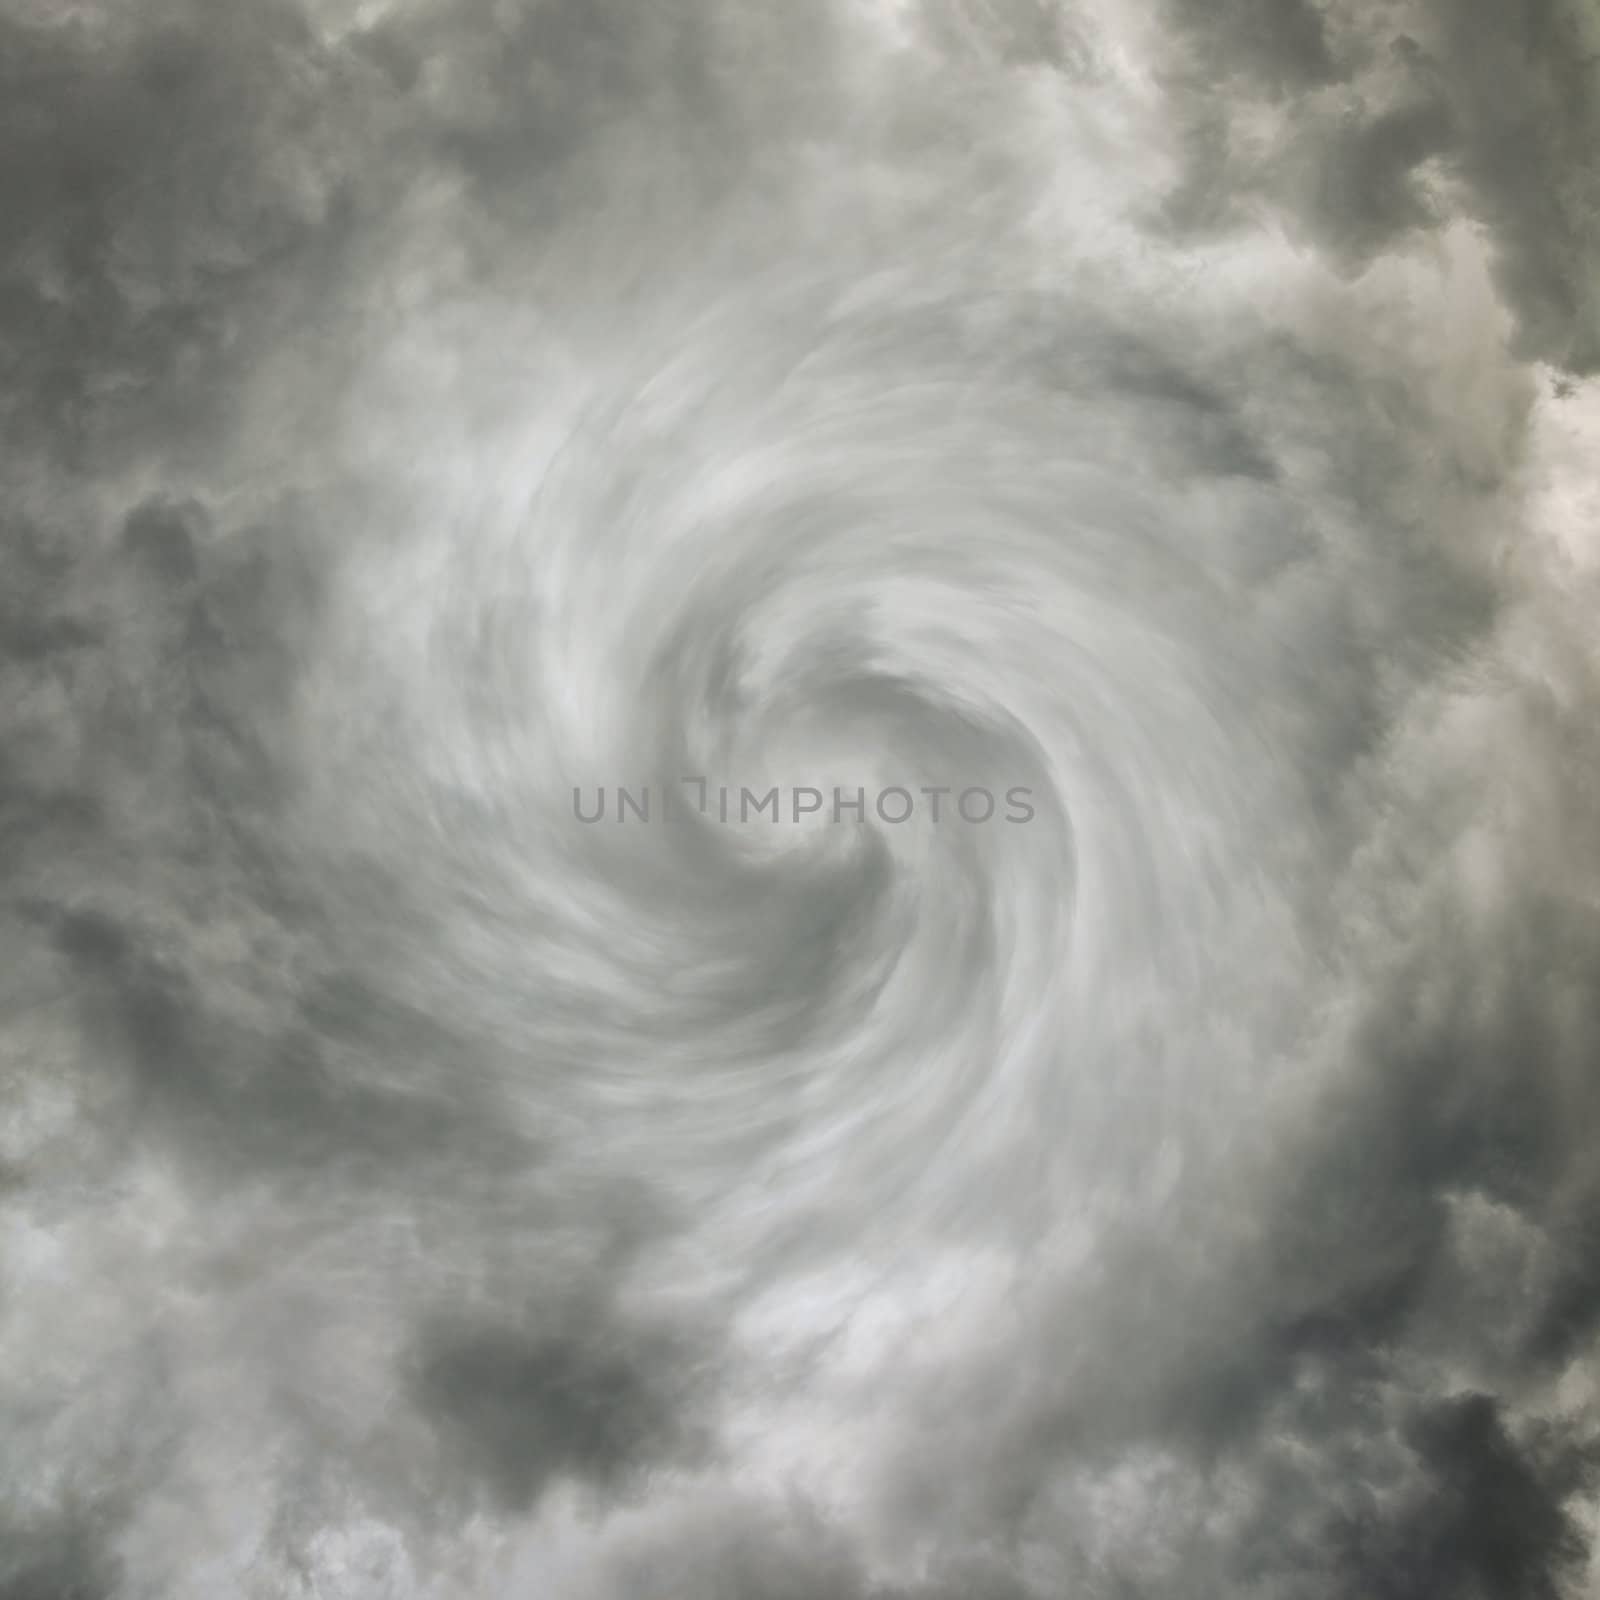 Twisting spiral dark sky with storm clouds